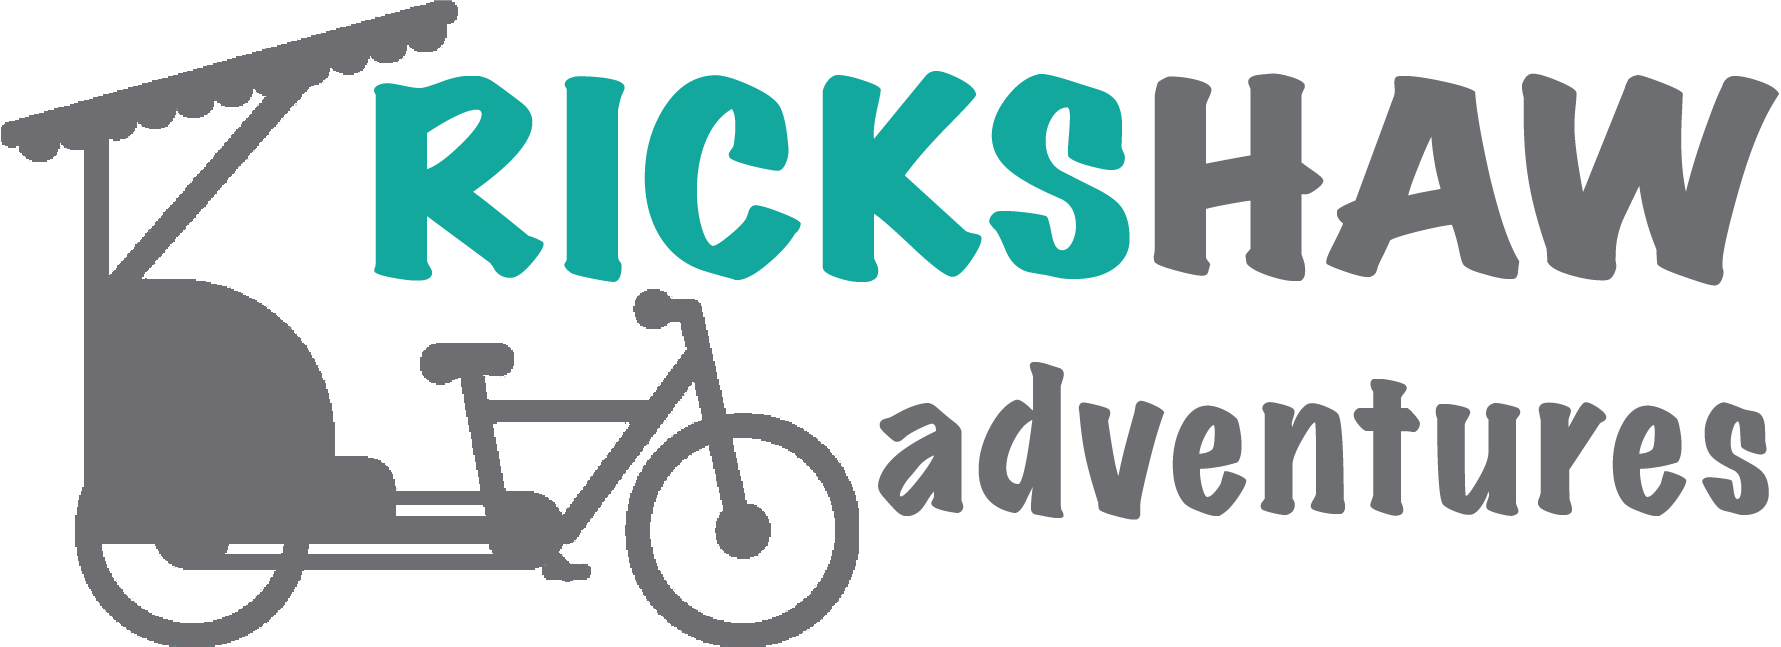 Rickshaw Logo Images, Illustrations & Vectors (Free) - Bigstock